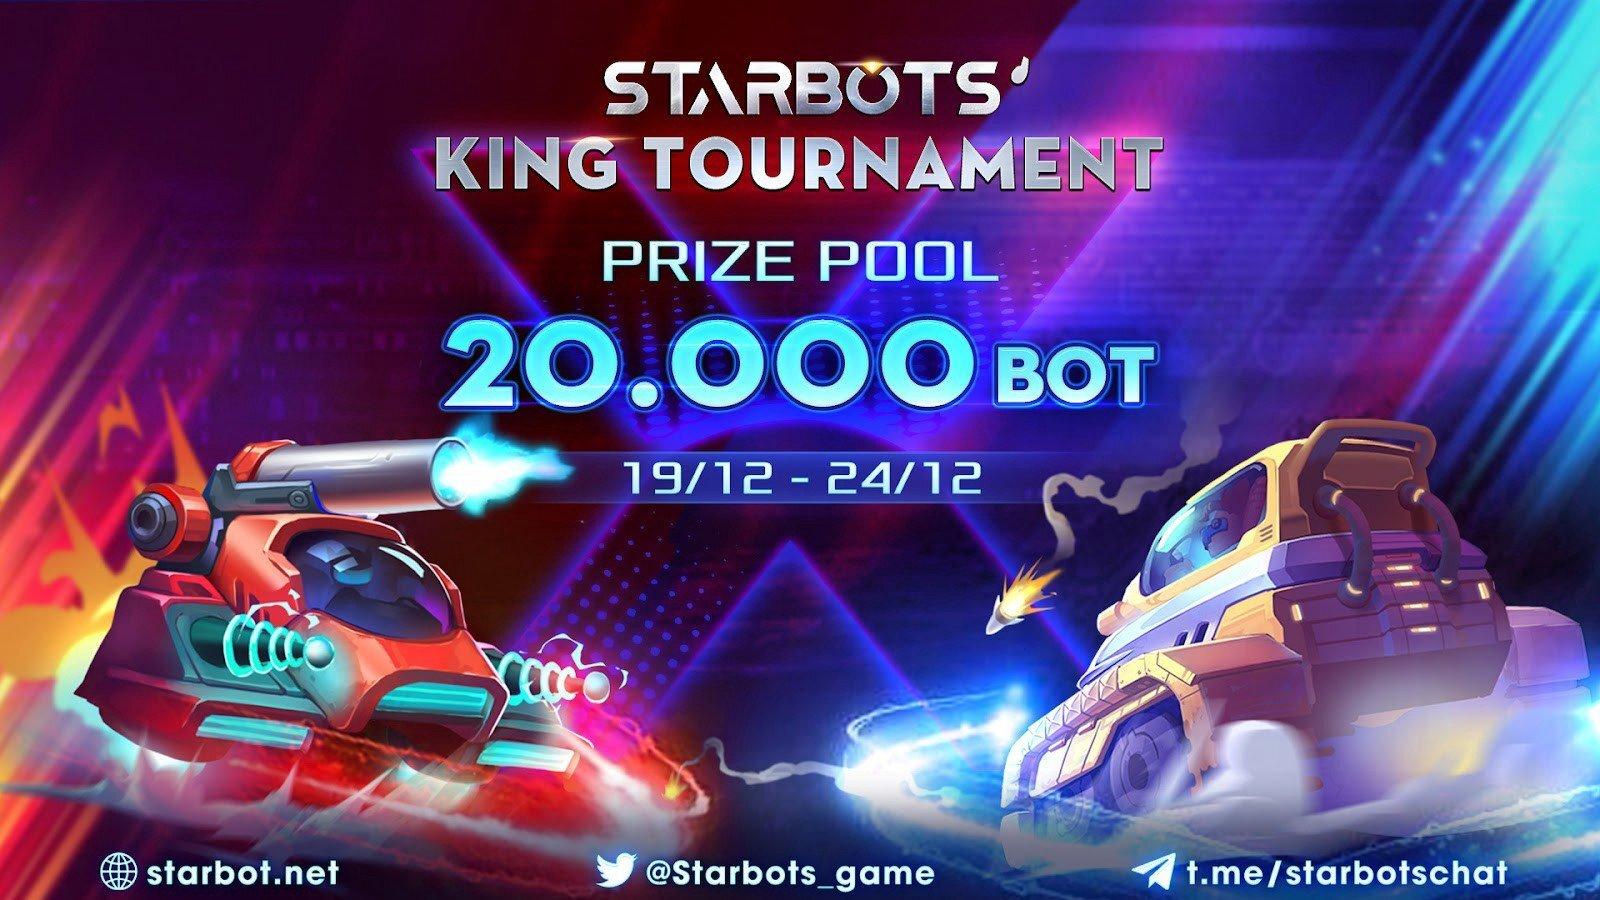 starbots-bot-to-chuc-su-kien-starbots-king-tournament-truoc-them-phat-hanh-testnet